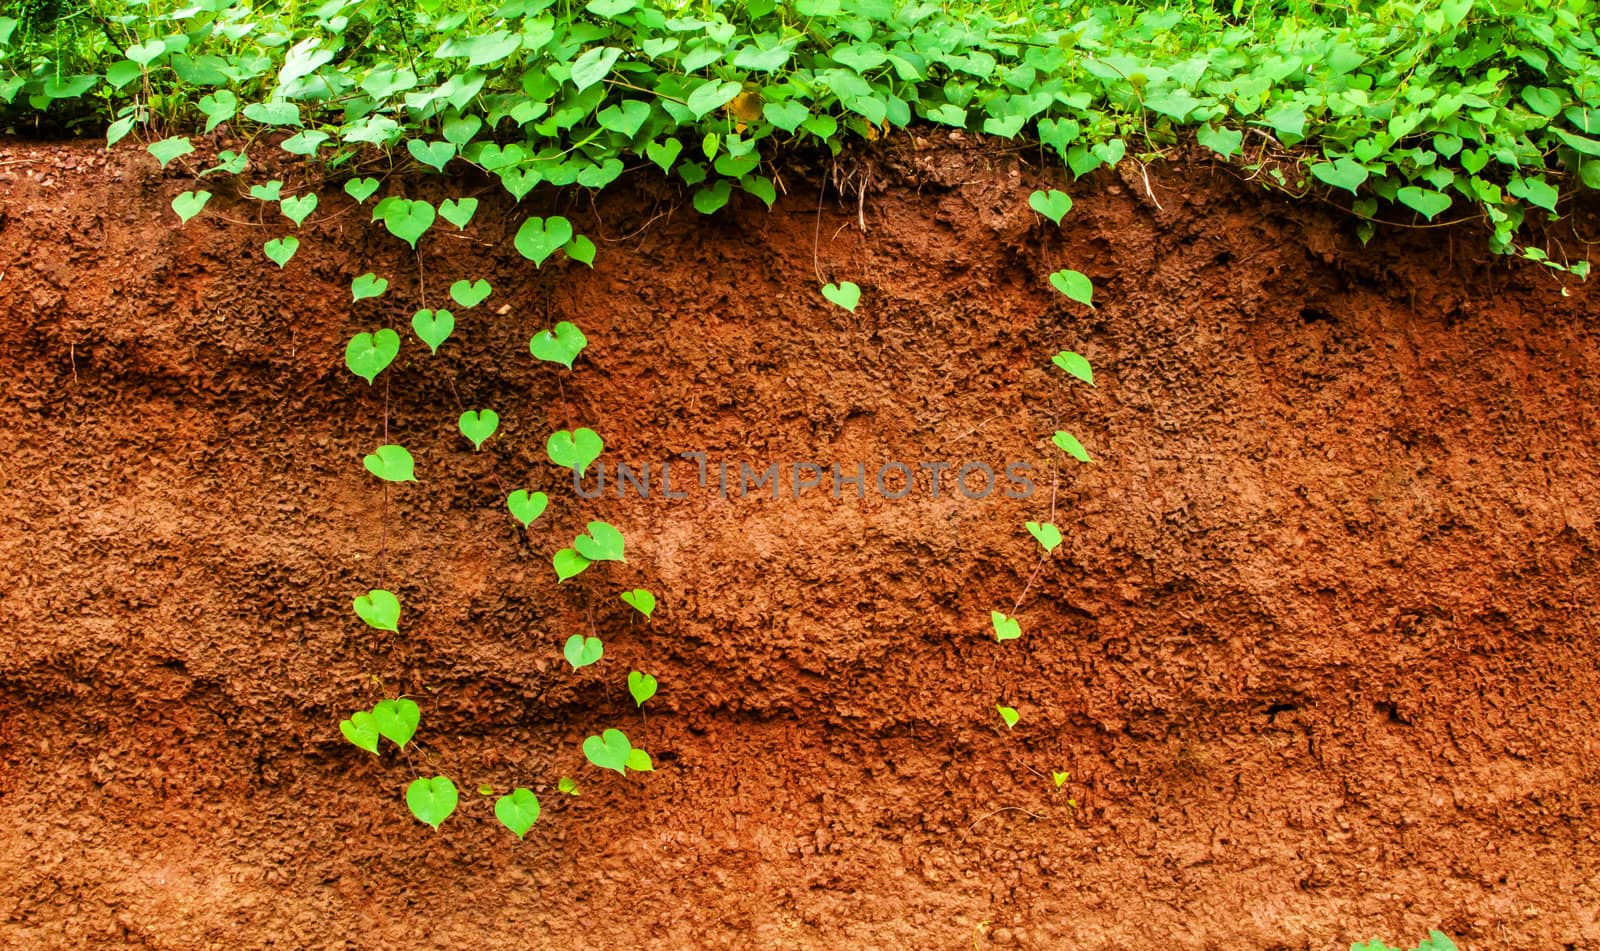 green heart leaf and underground red gravel beneath